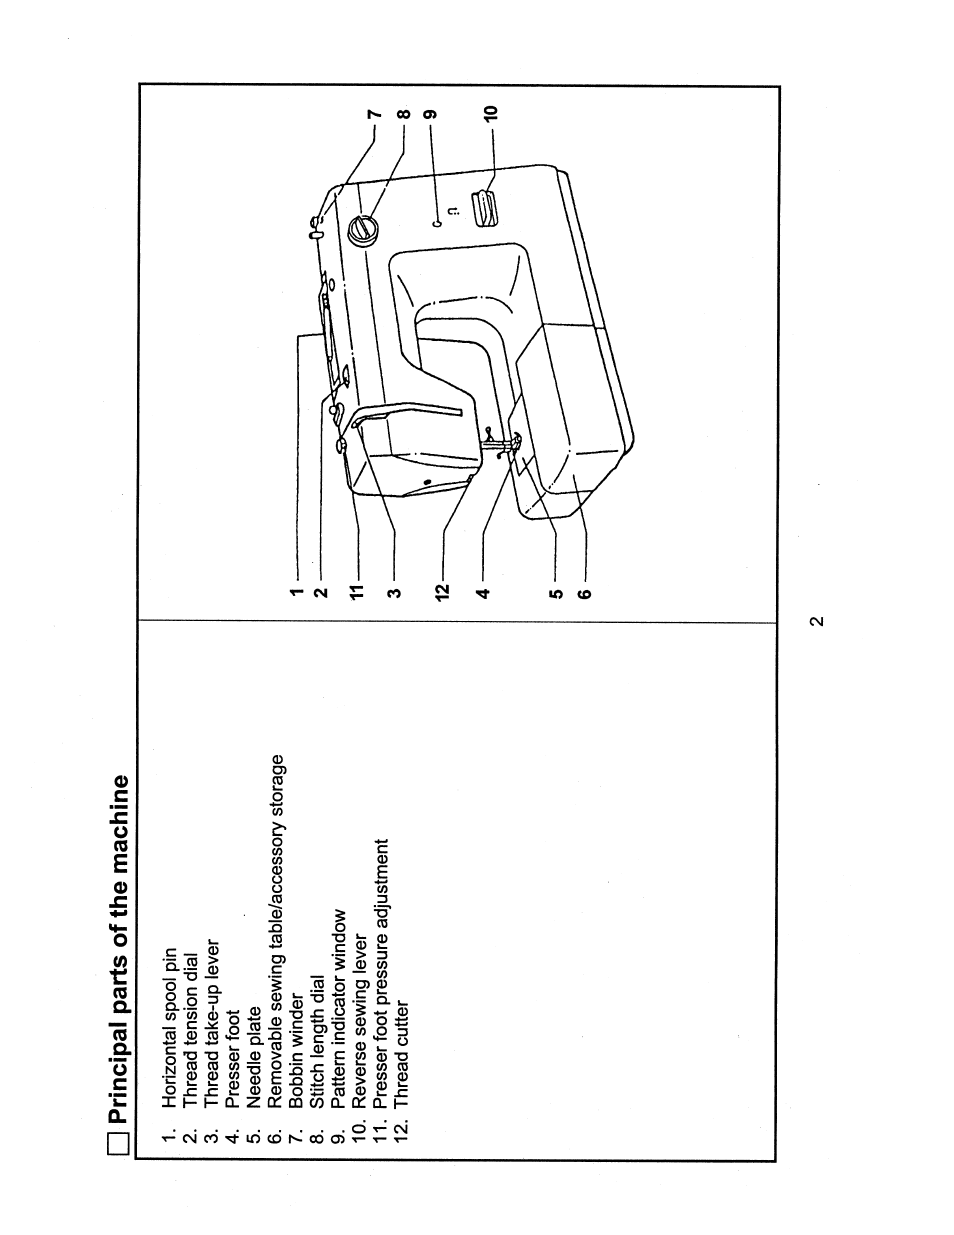 Principal parts of the machine, Principal parts of the machine /3 | SINGER 1116 User Manual | Page 5 / 41